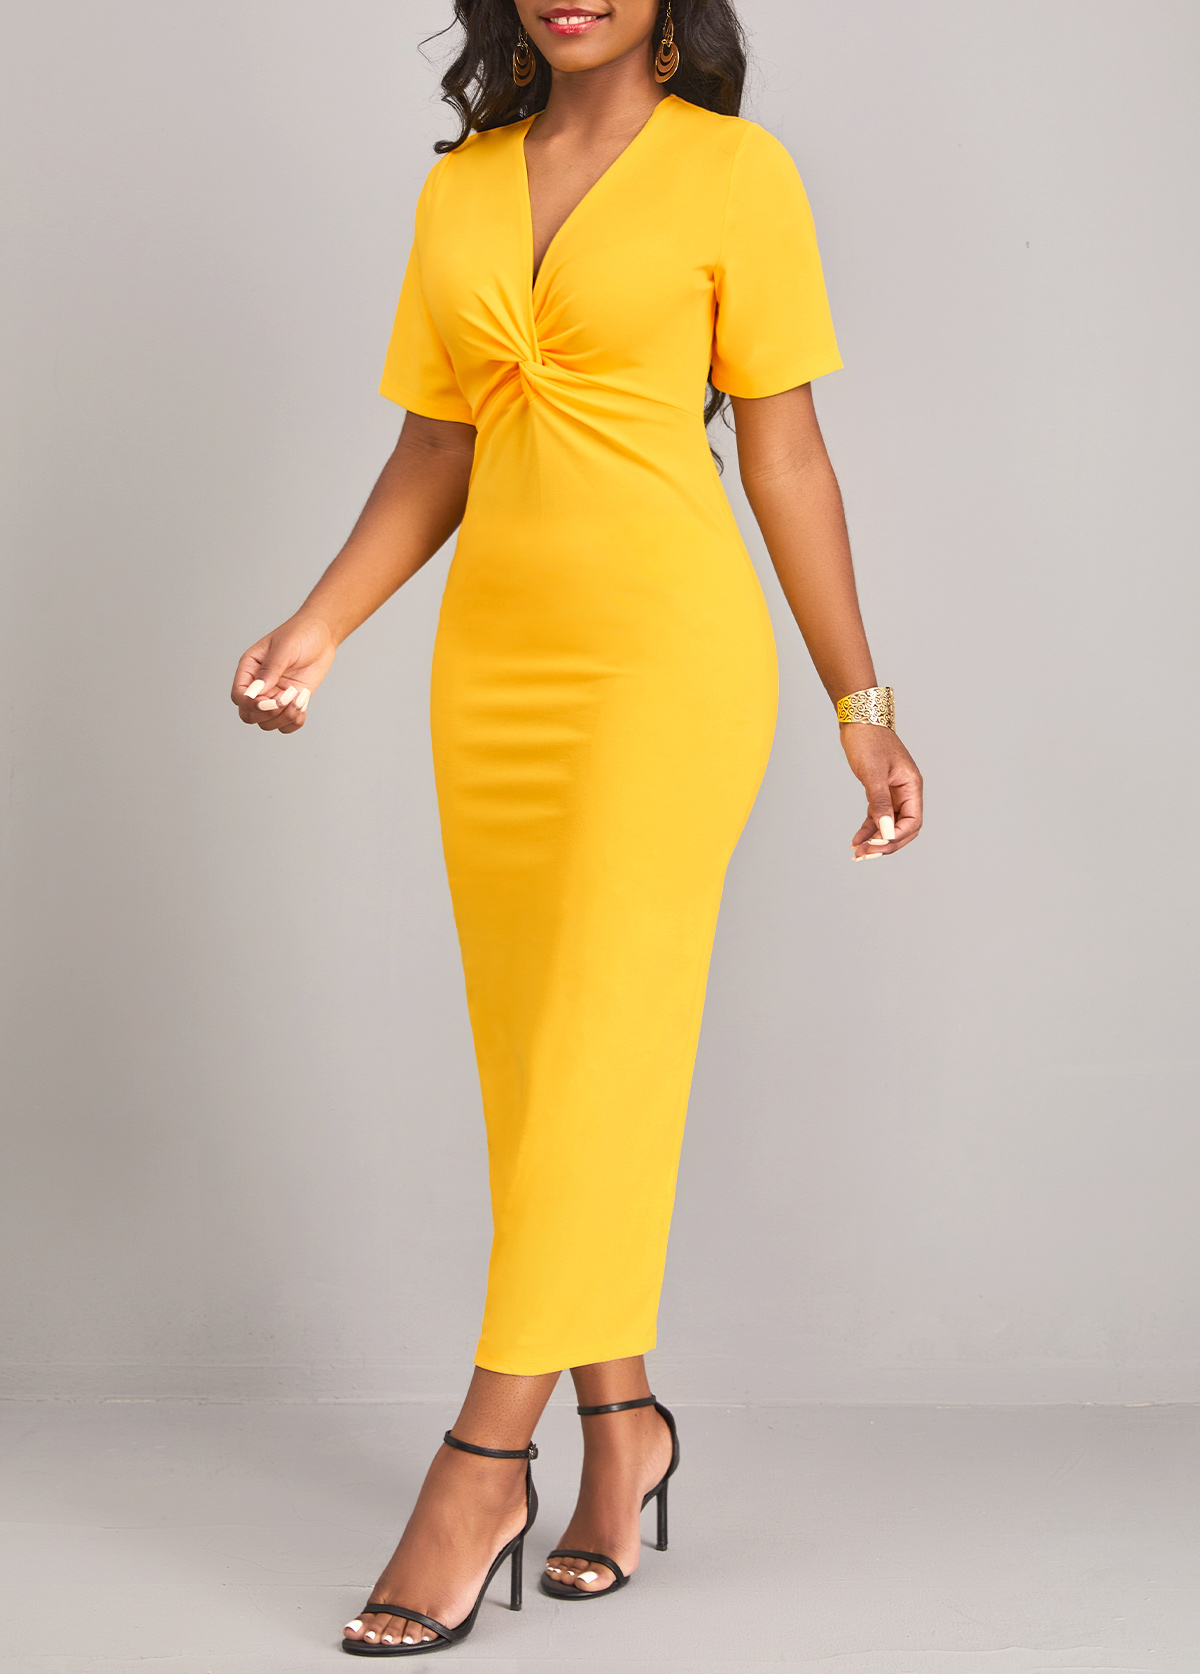 Twist V Neck Yellow Short Sleeve Bodycon Dress